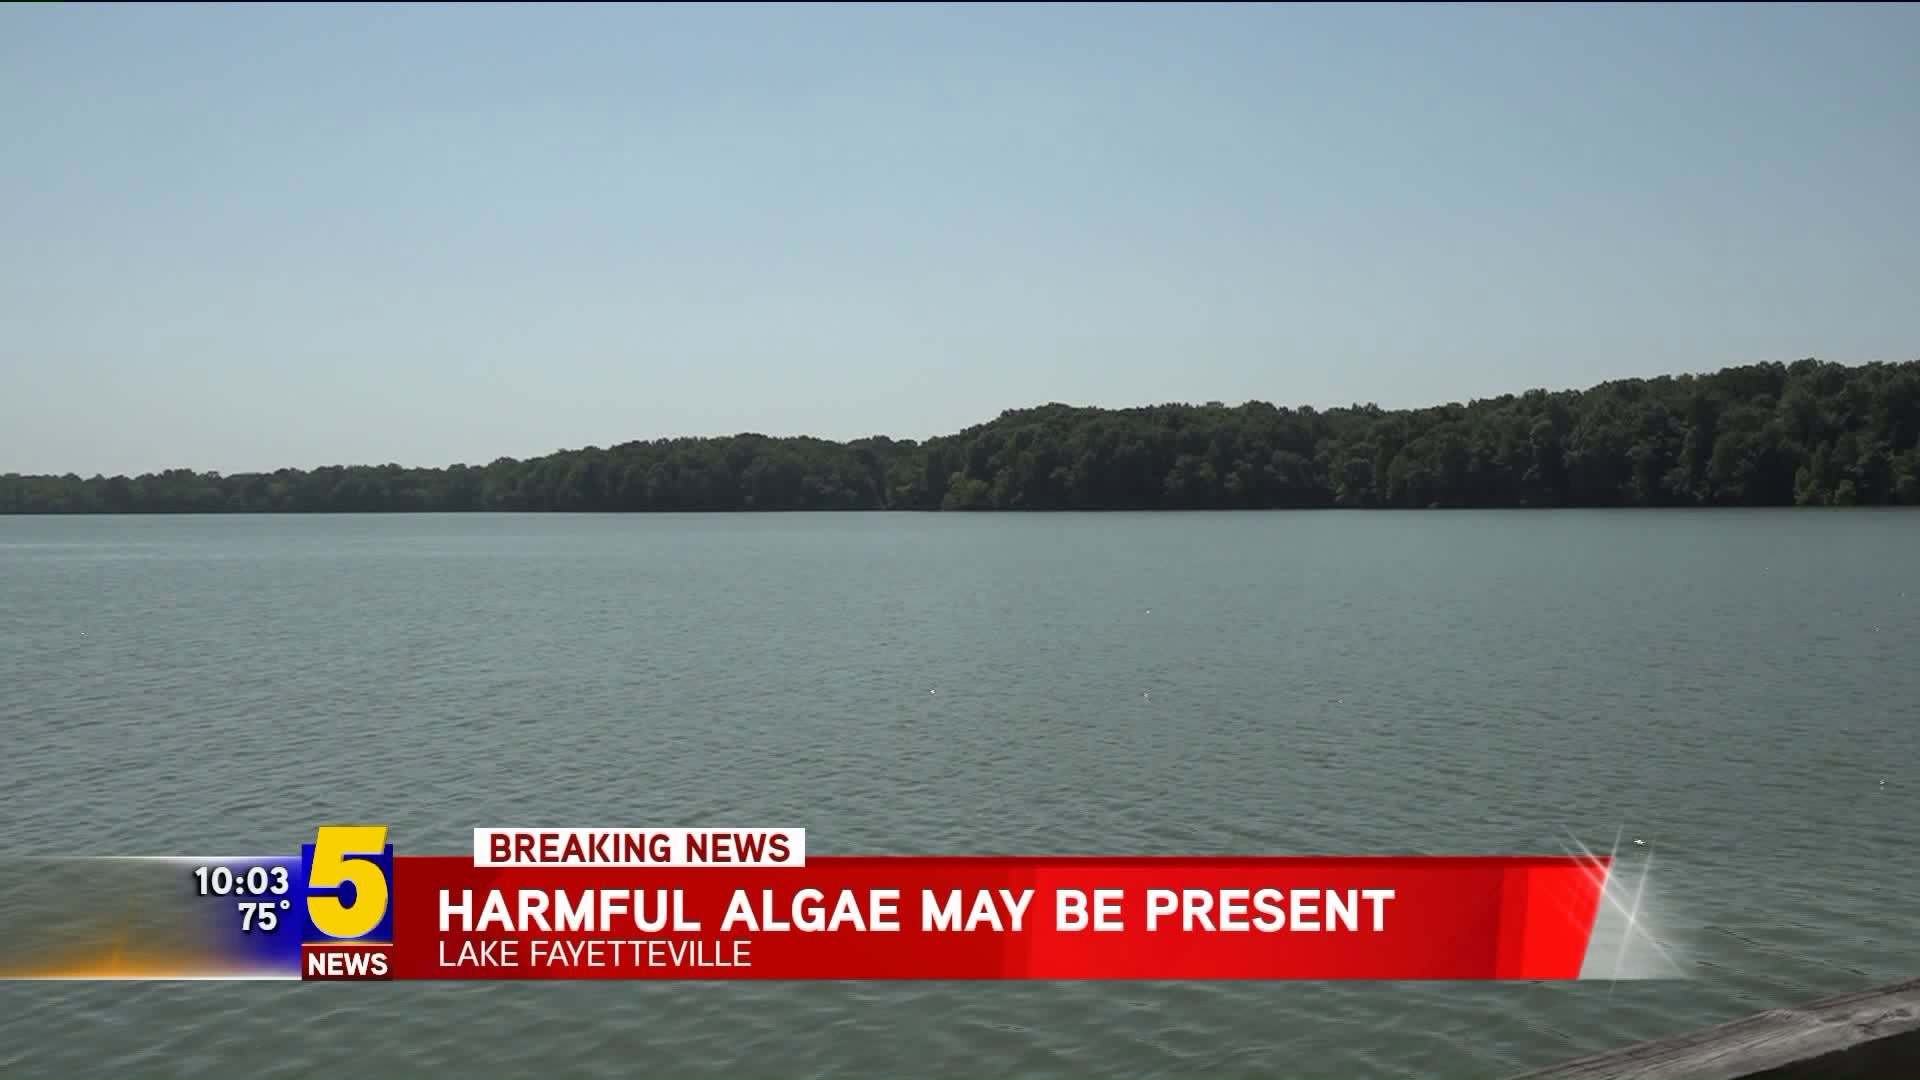 Harmful Algae May Be Present at Lake Fayetteville